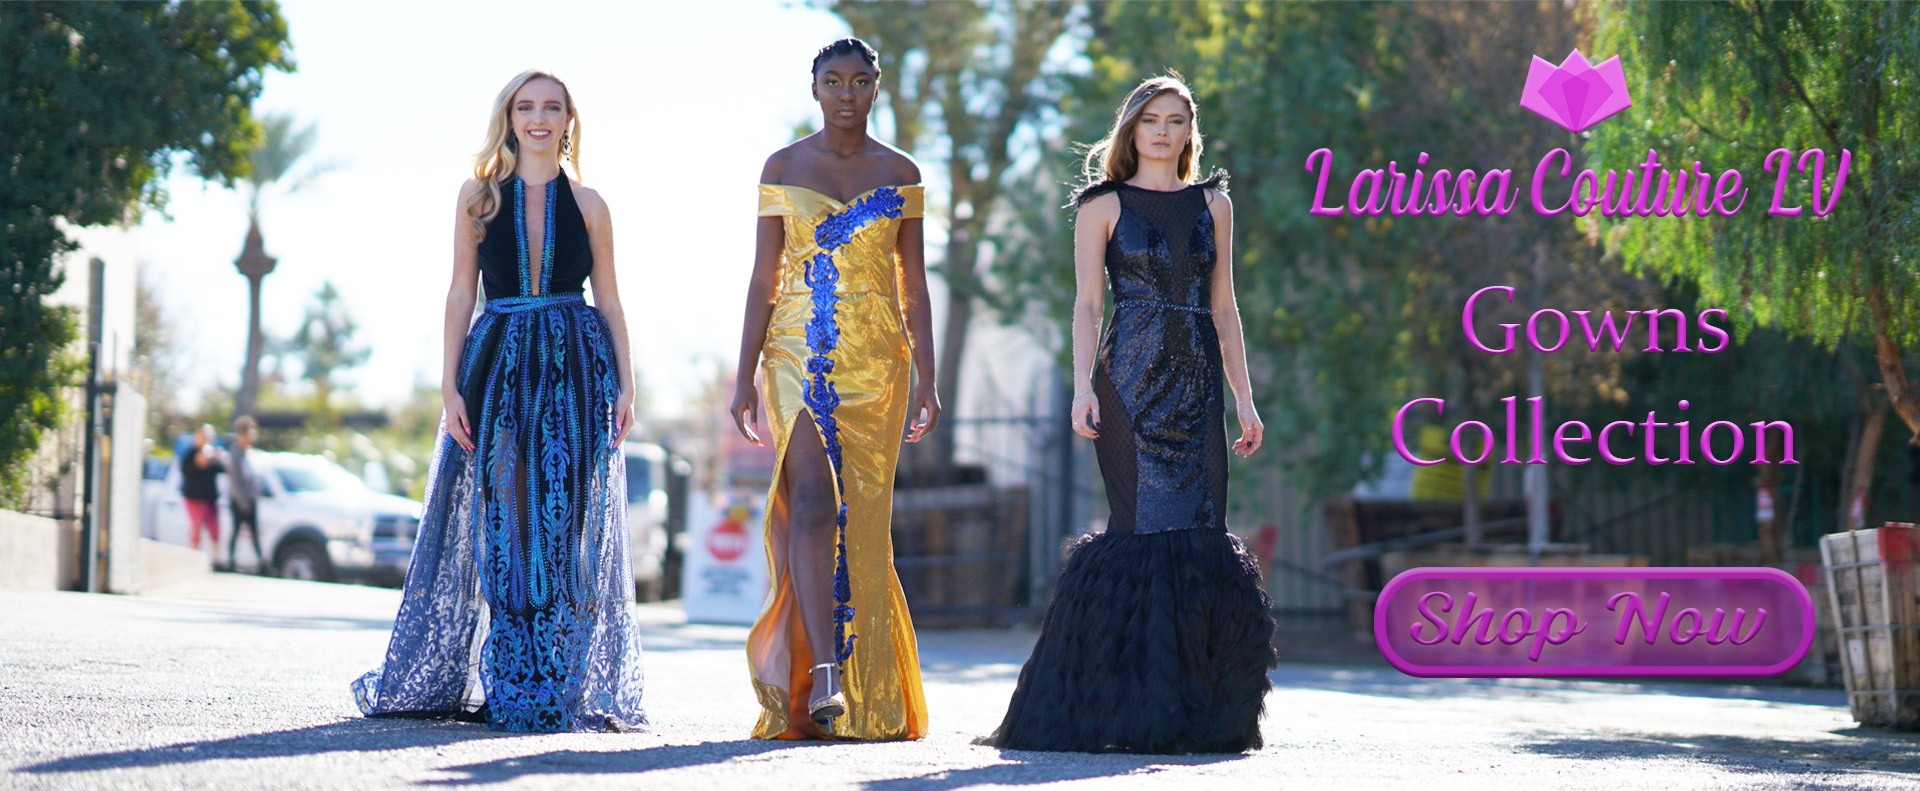 Iza Hot pink Velvet Gown - Larissa Couture LV